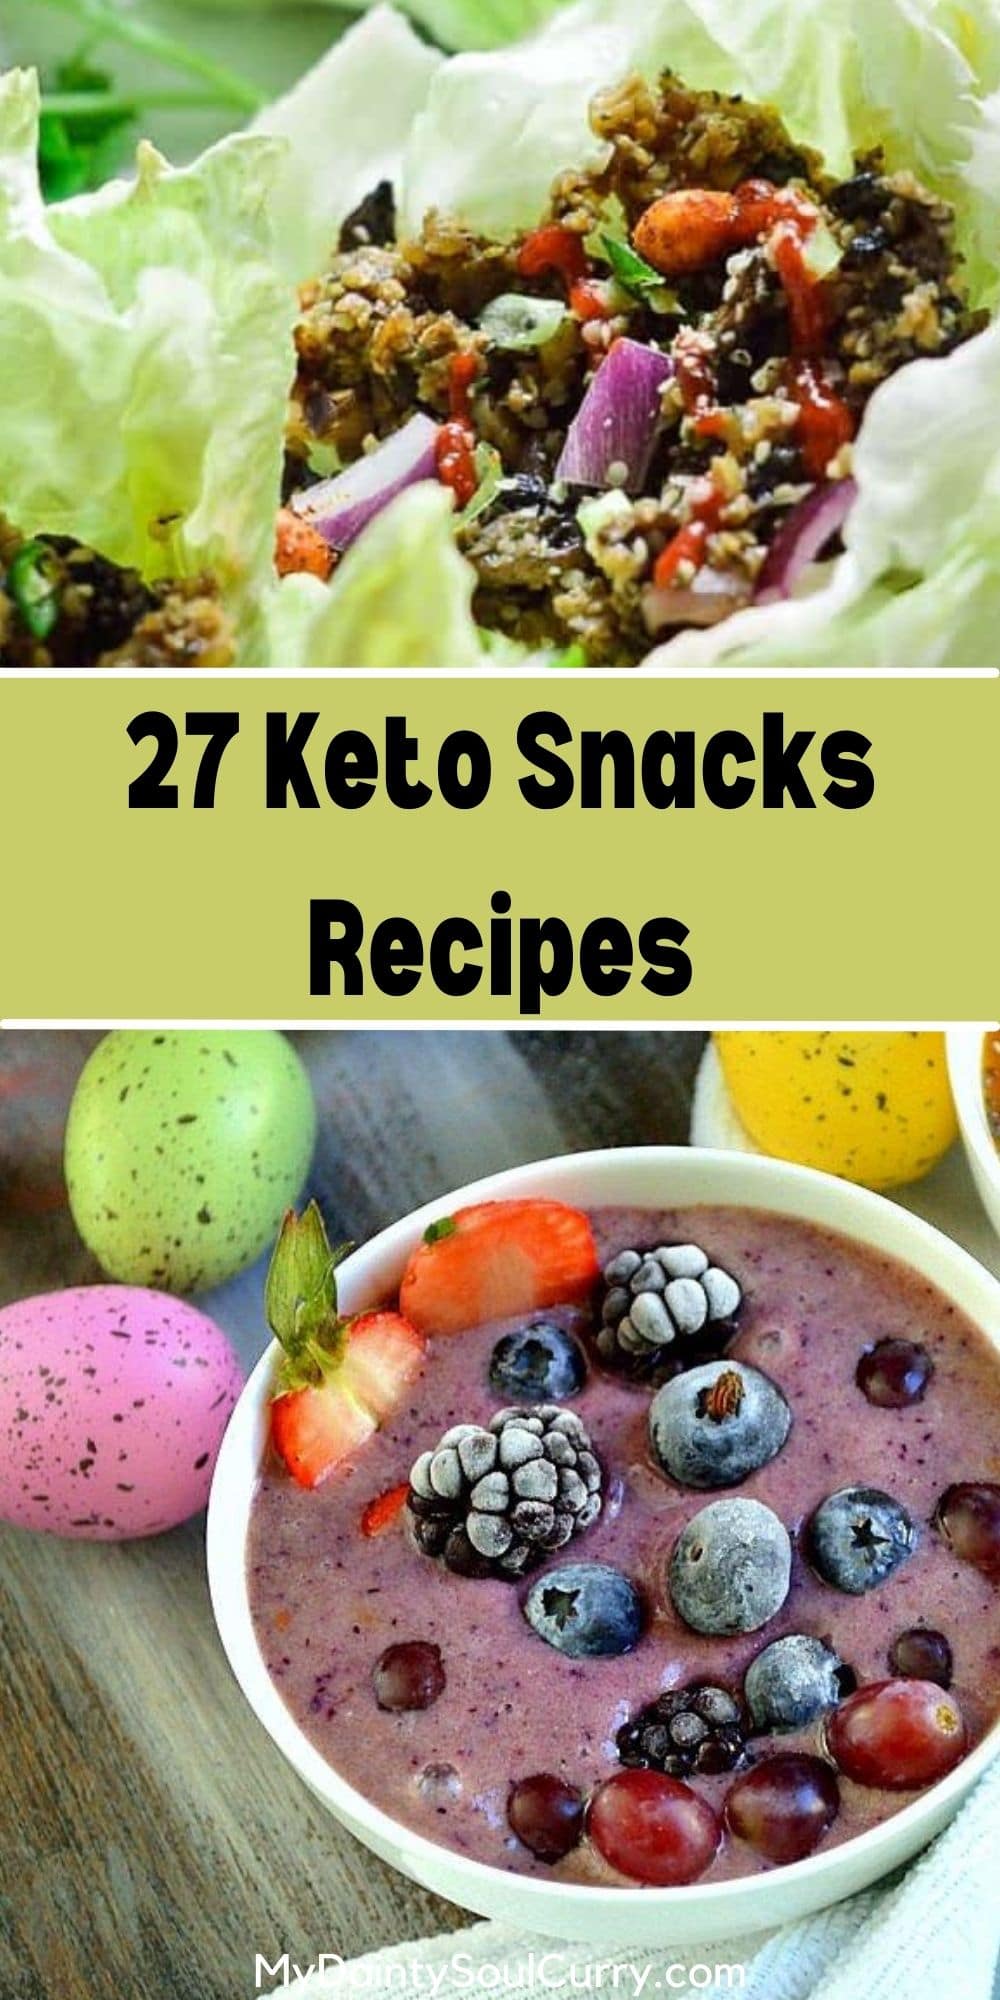 27 Keto Snacks Recipes - My Dainty Soul Curry